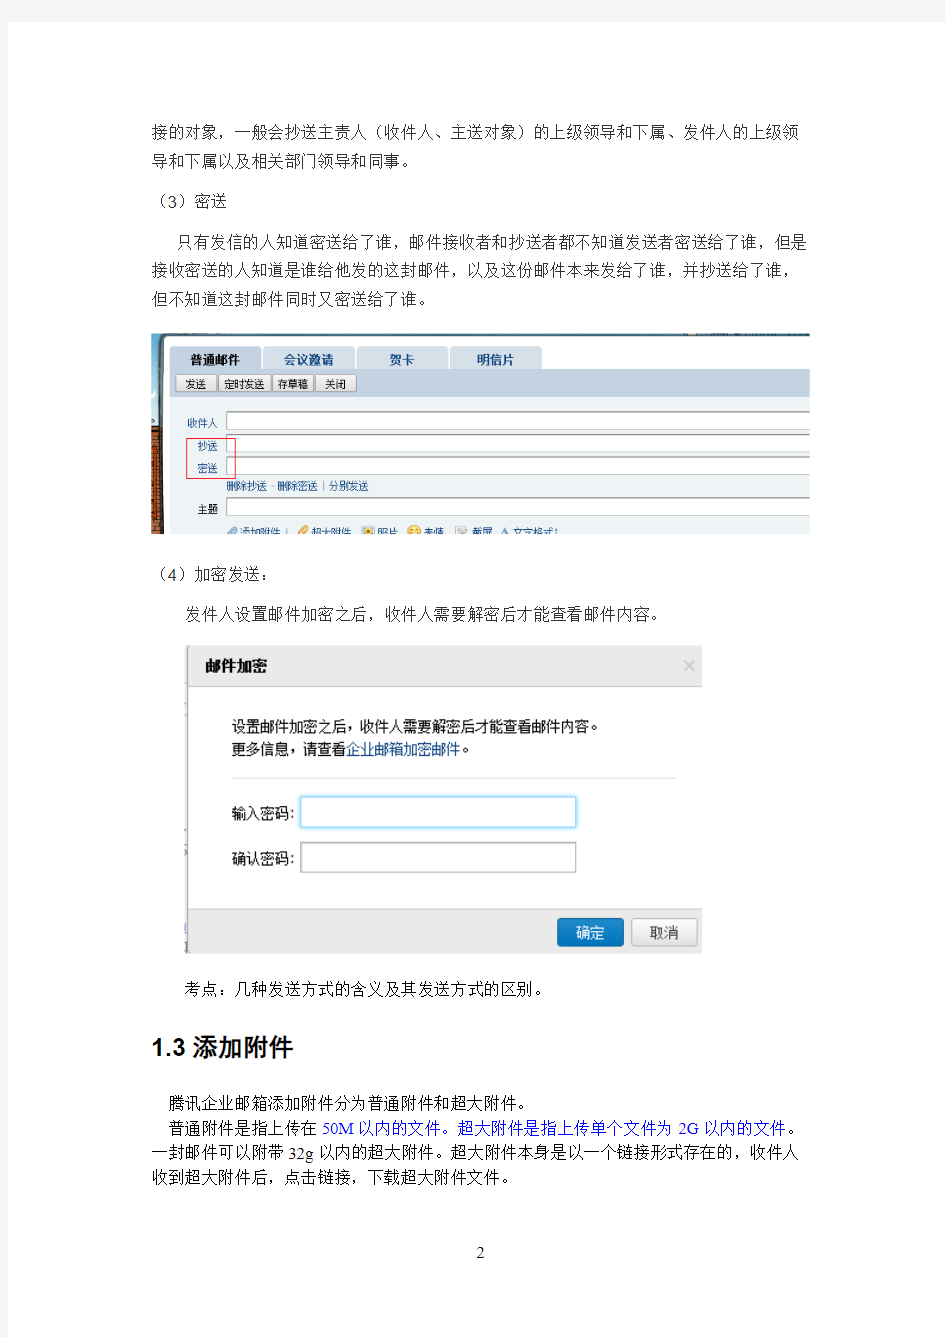 Removed_腾讯企业邮箱用户篇